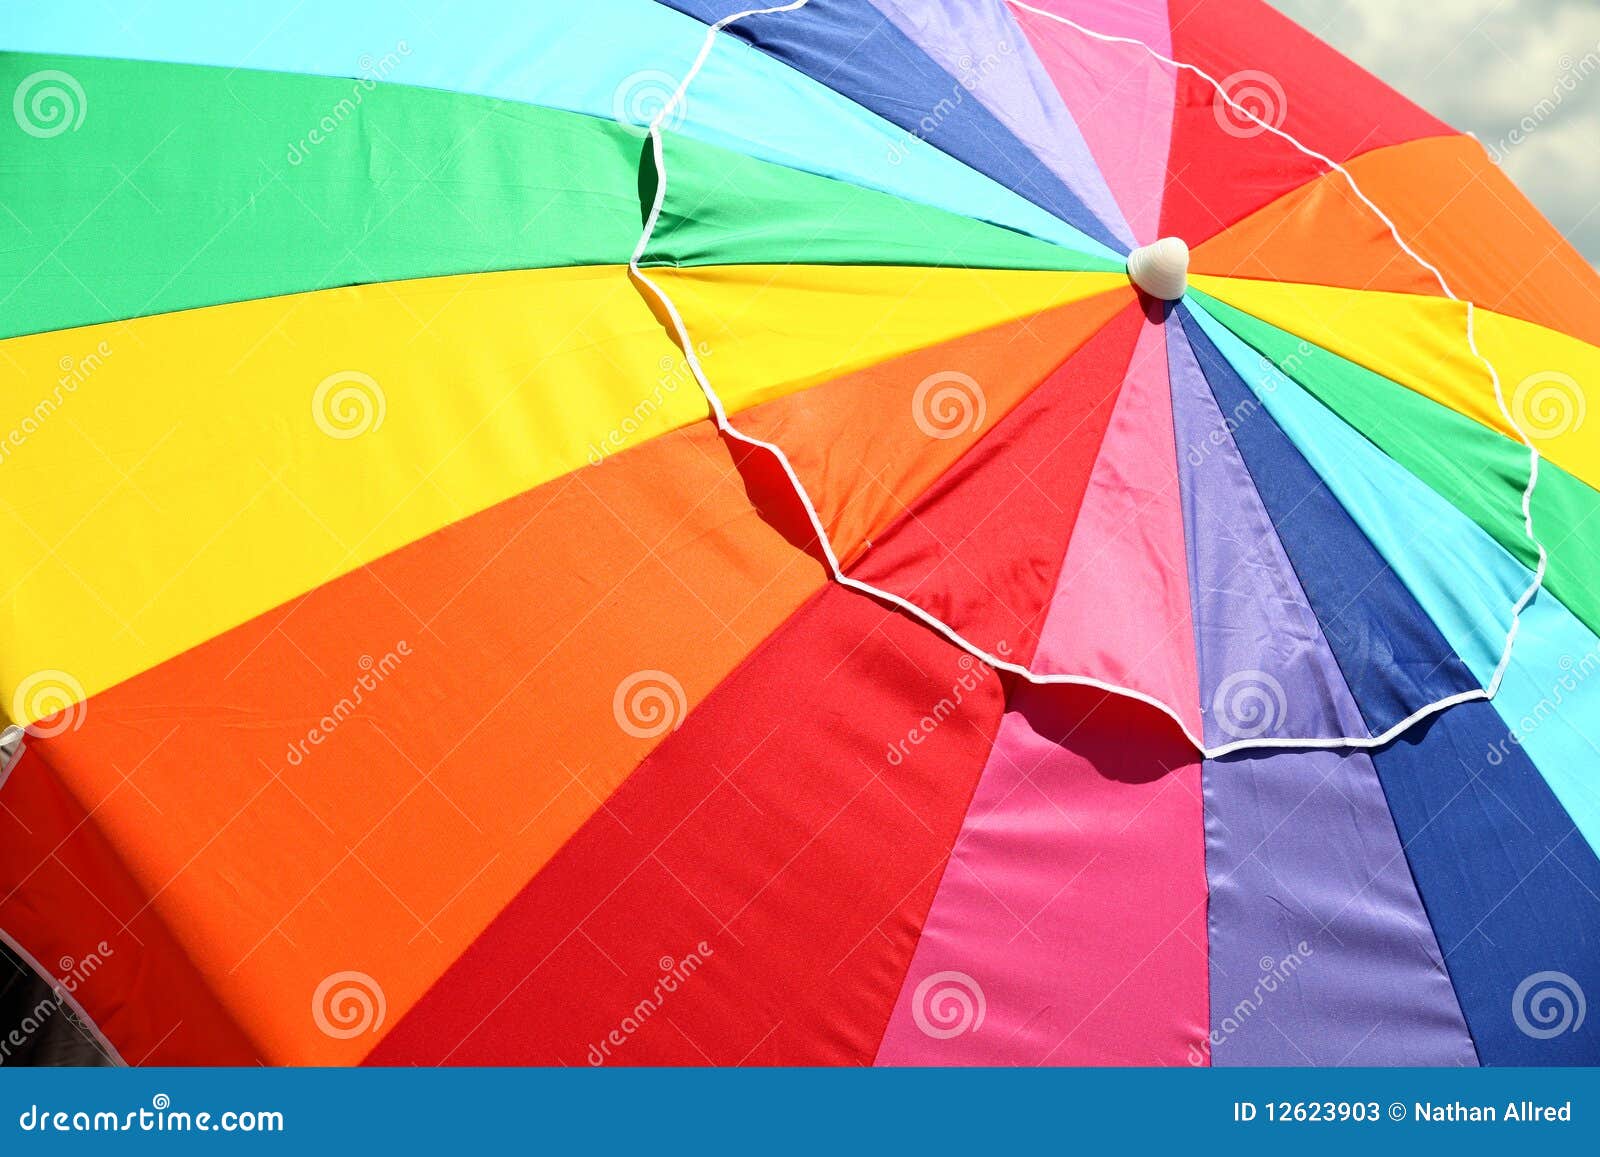 Rainbow Umbrella Stock Photos - Image: 12623903